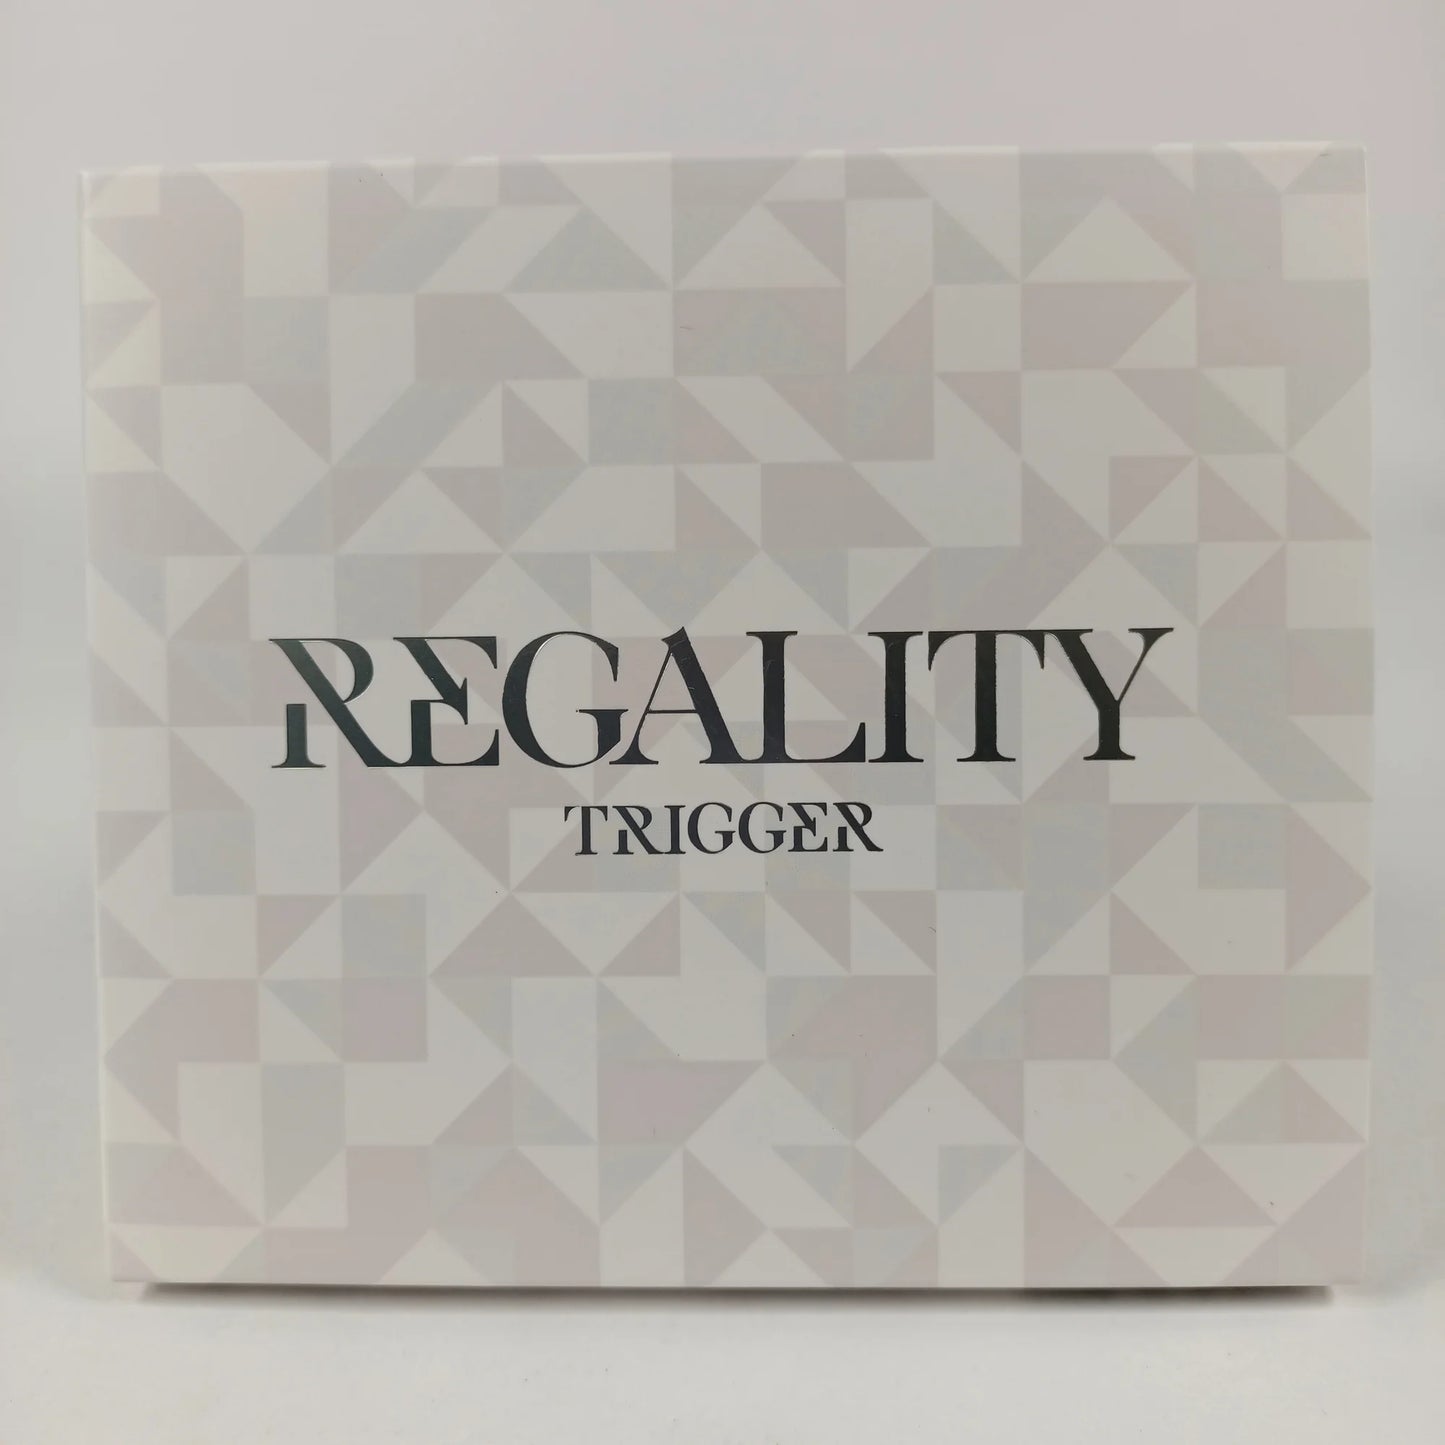 Regality Trigger